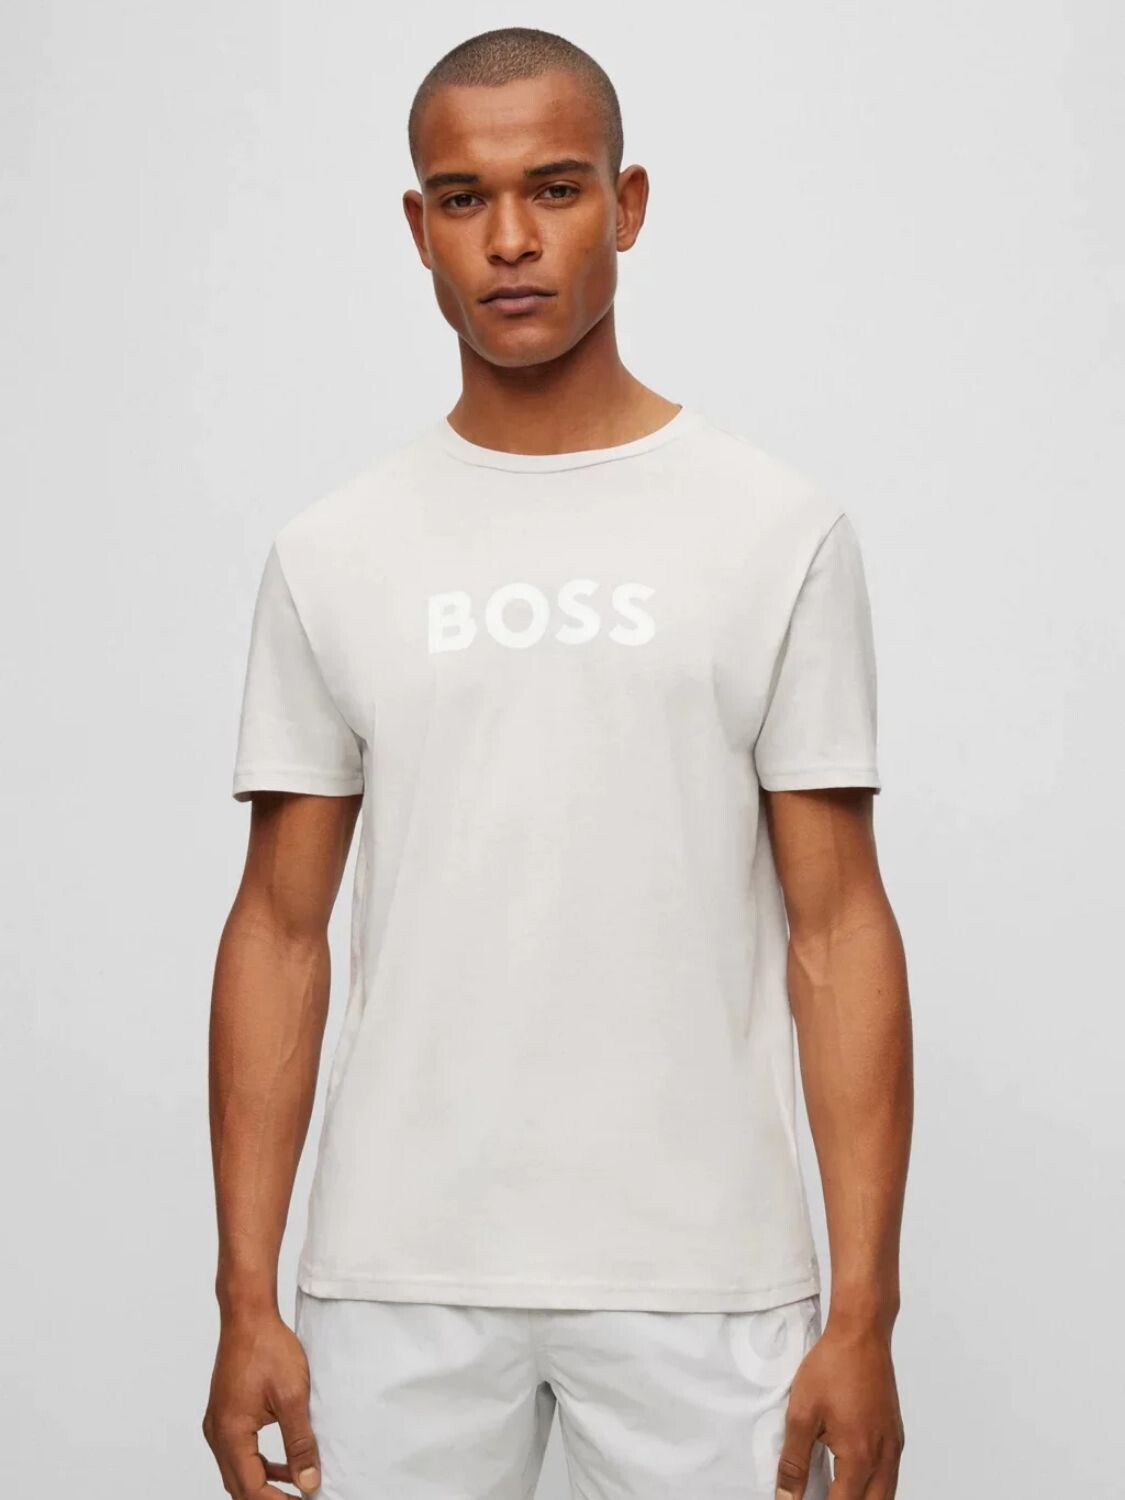 Hugo Boss -Remera de algodón con logo, regular fit, HUGO BOSS Gris